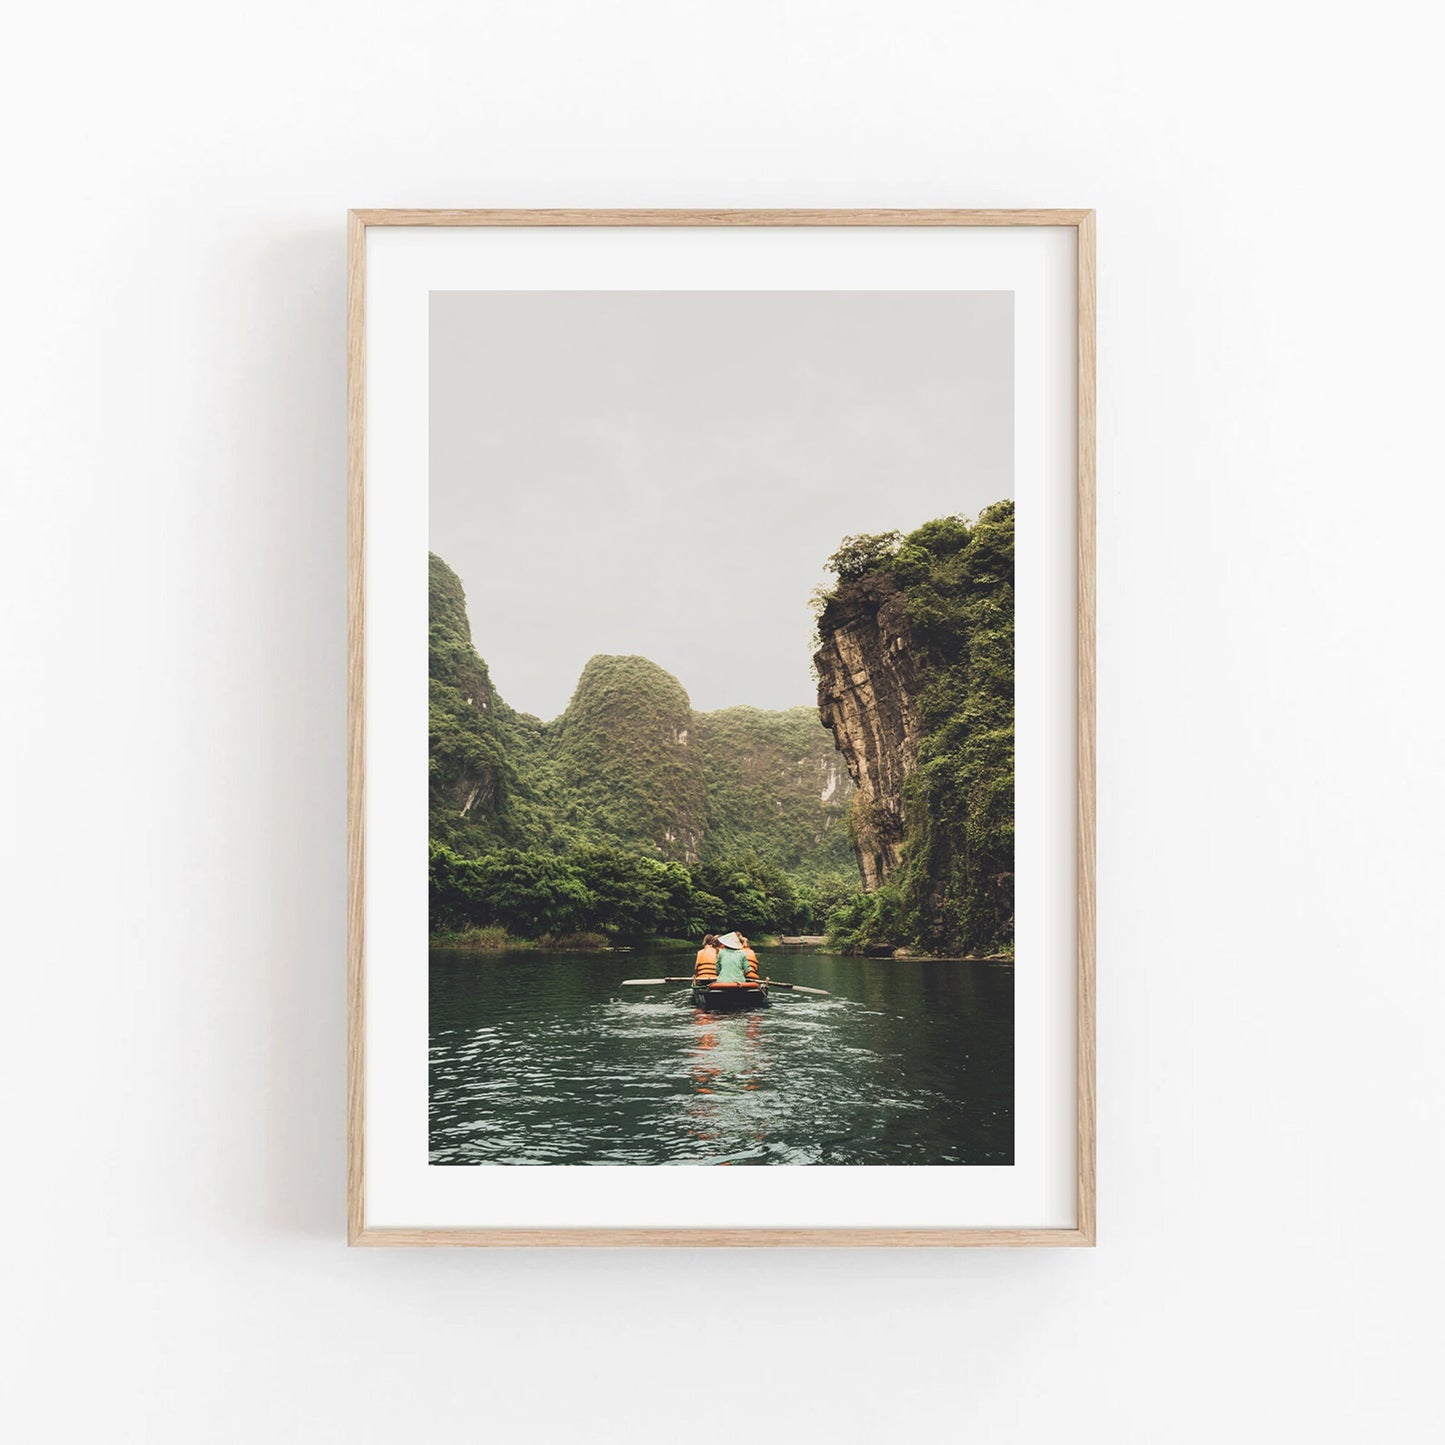 Small boat in the waterway between tall limestones in Ninh Binh, Vietnam.